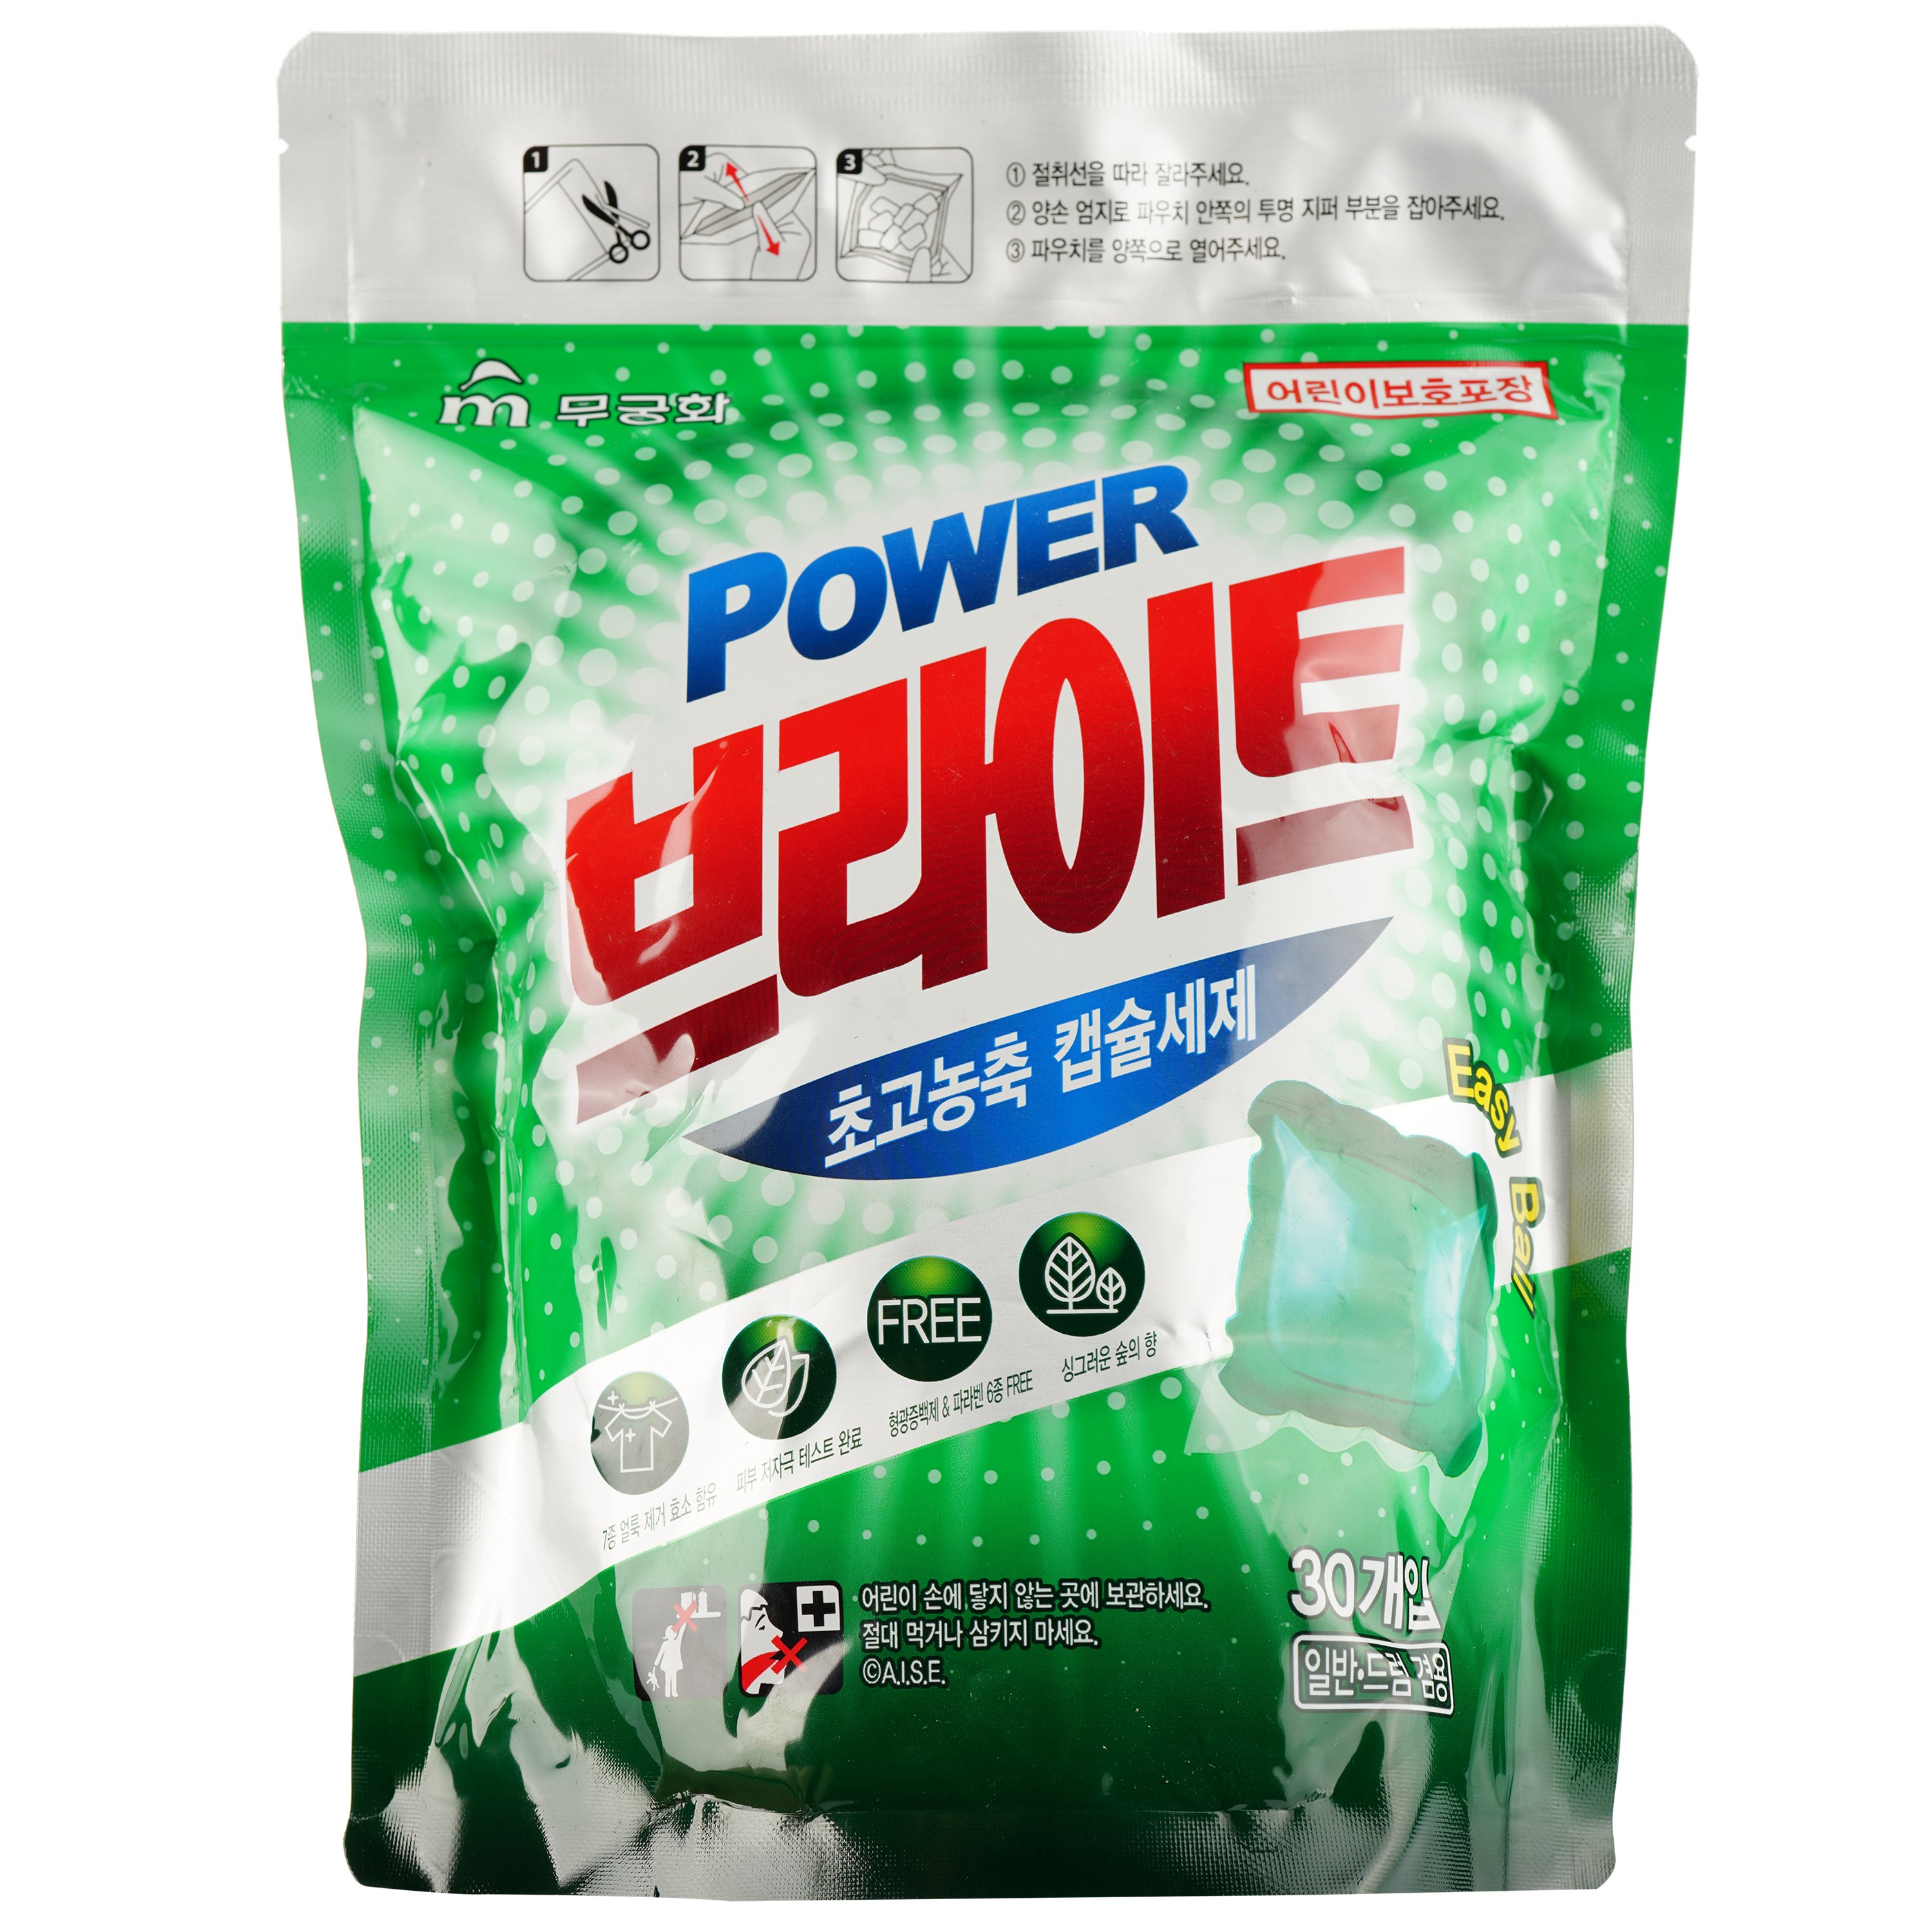 Капсулы для стирки Mukunghwa Power Bright Laundry Capsule Detergent, 30 шт. - фото 2